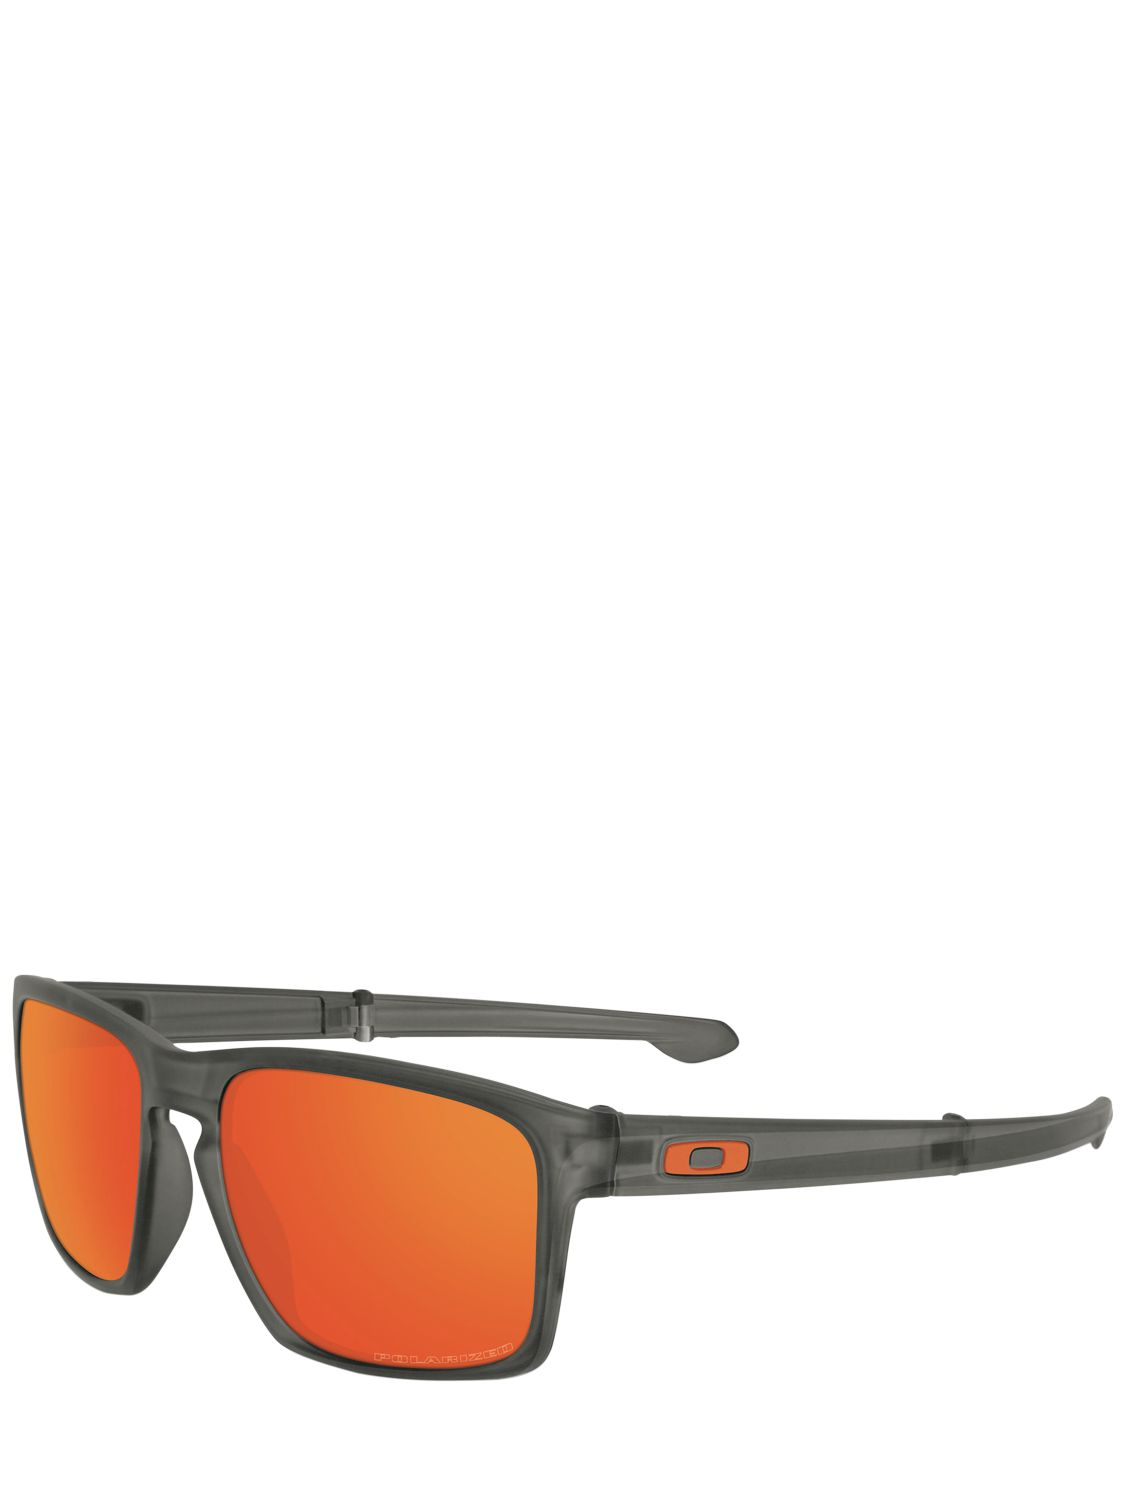 Oakley Sliver Foldable Sunglasses in Orange | Lyst